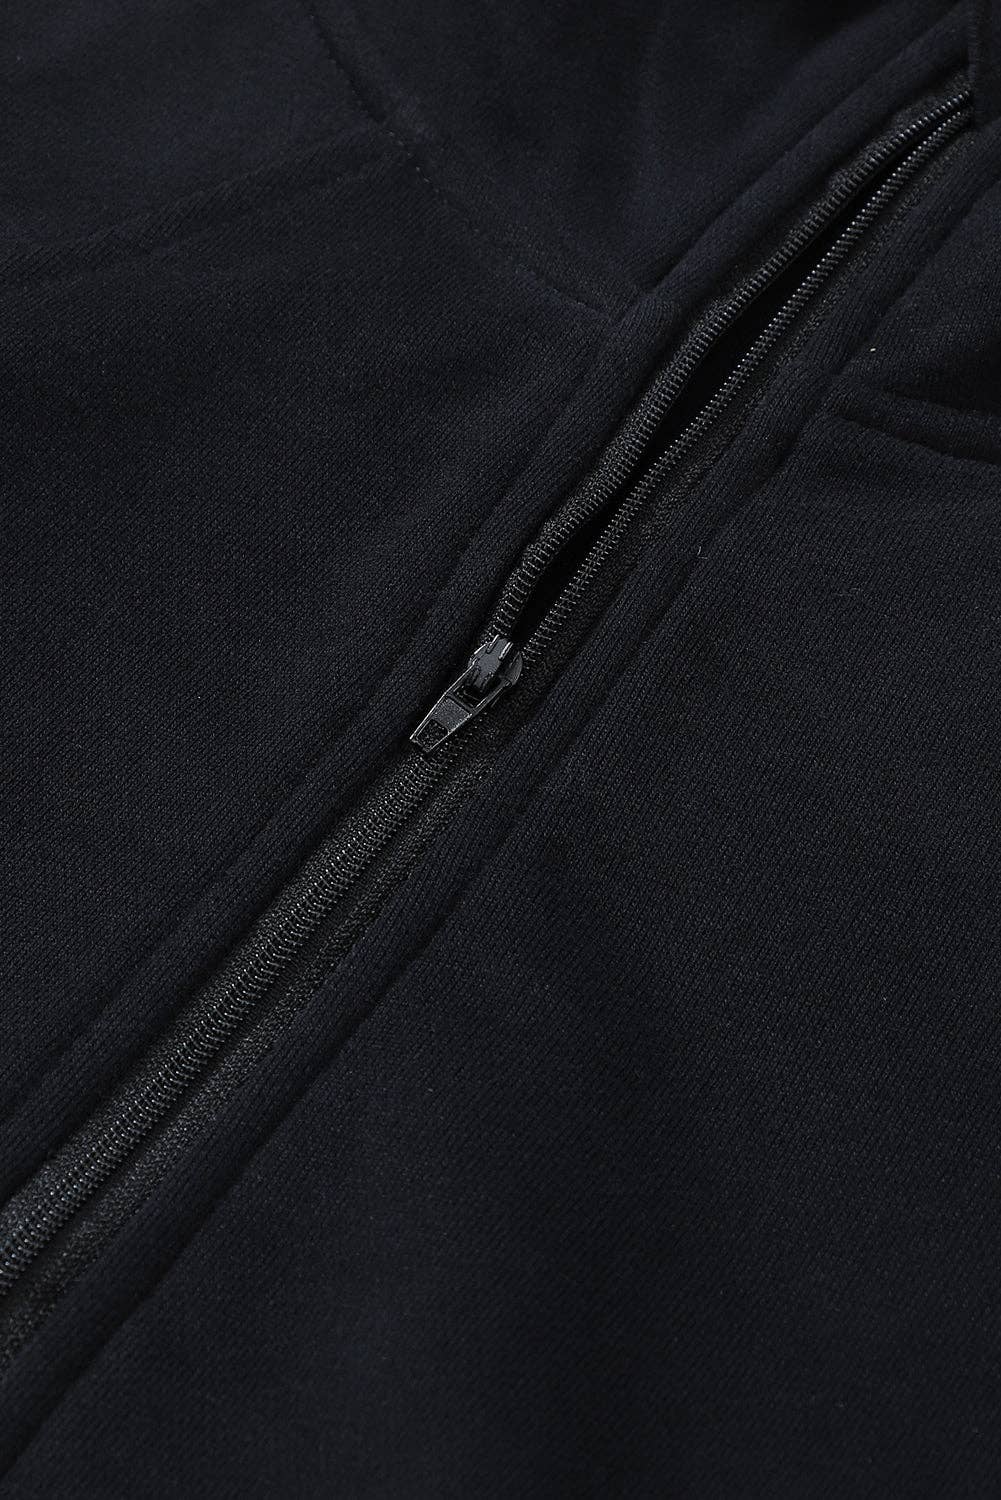 Black Zip Up Stand Collar Ribbed Thumbhole Sleeve Sweatshirt: Black